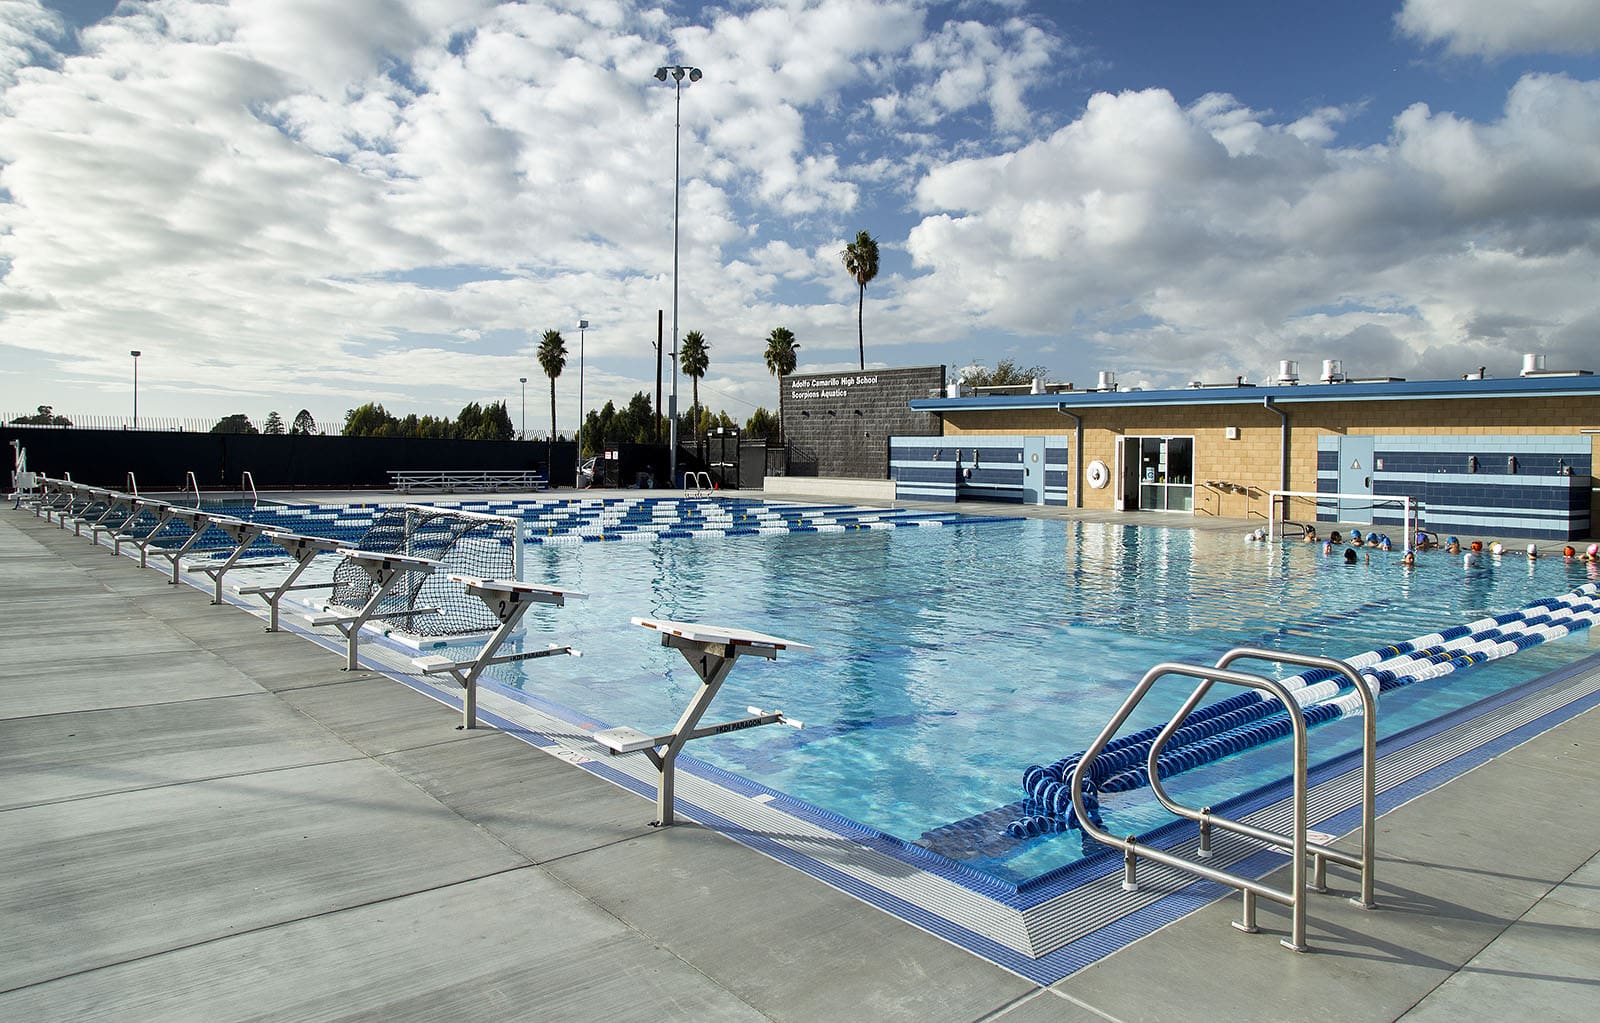 Aquatics FacilityAdolfo Camarillo High School • Blackbird Architects, Inc.